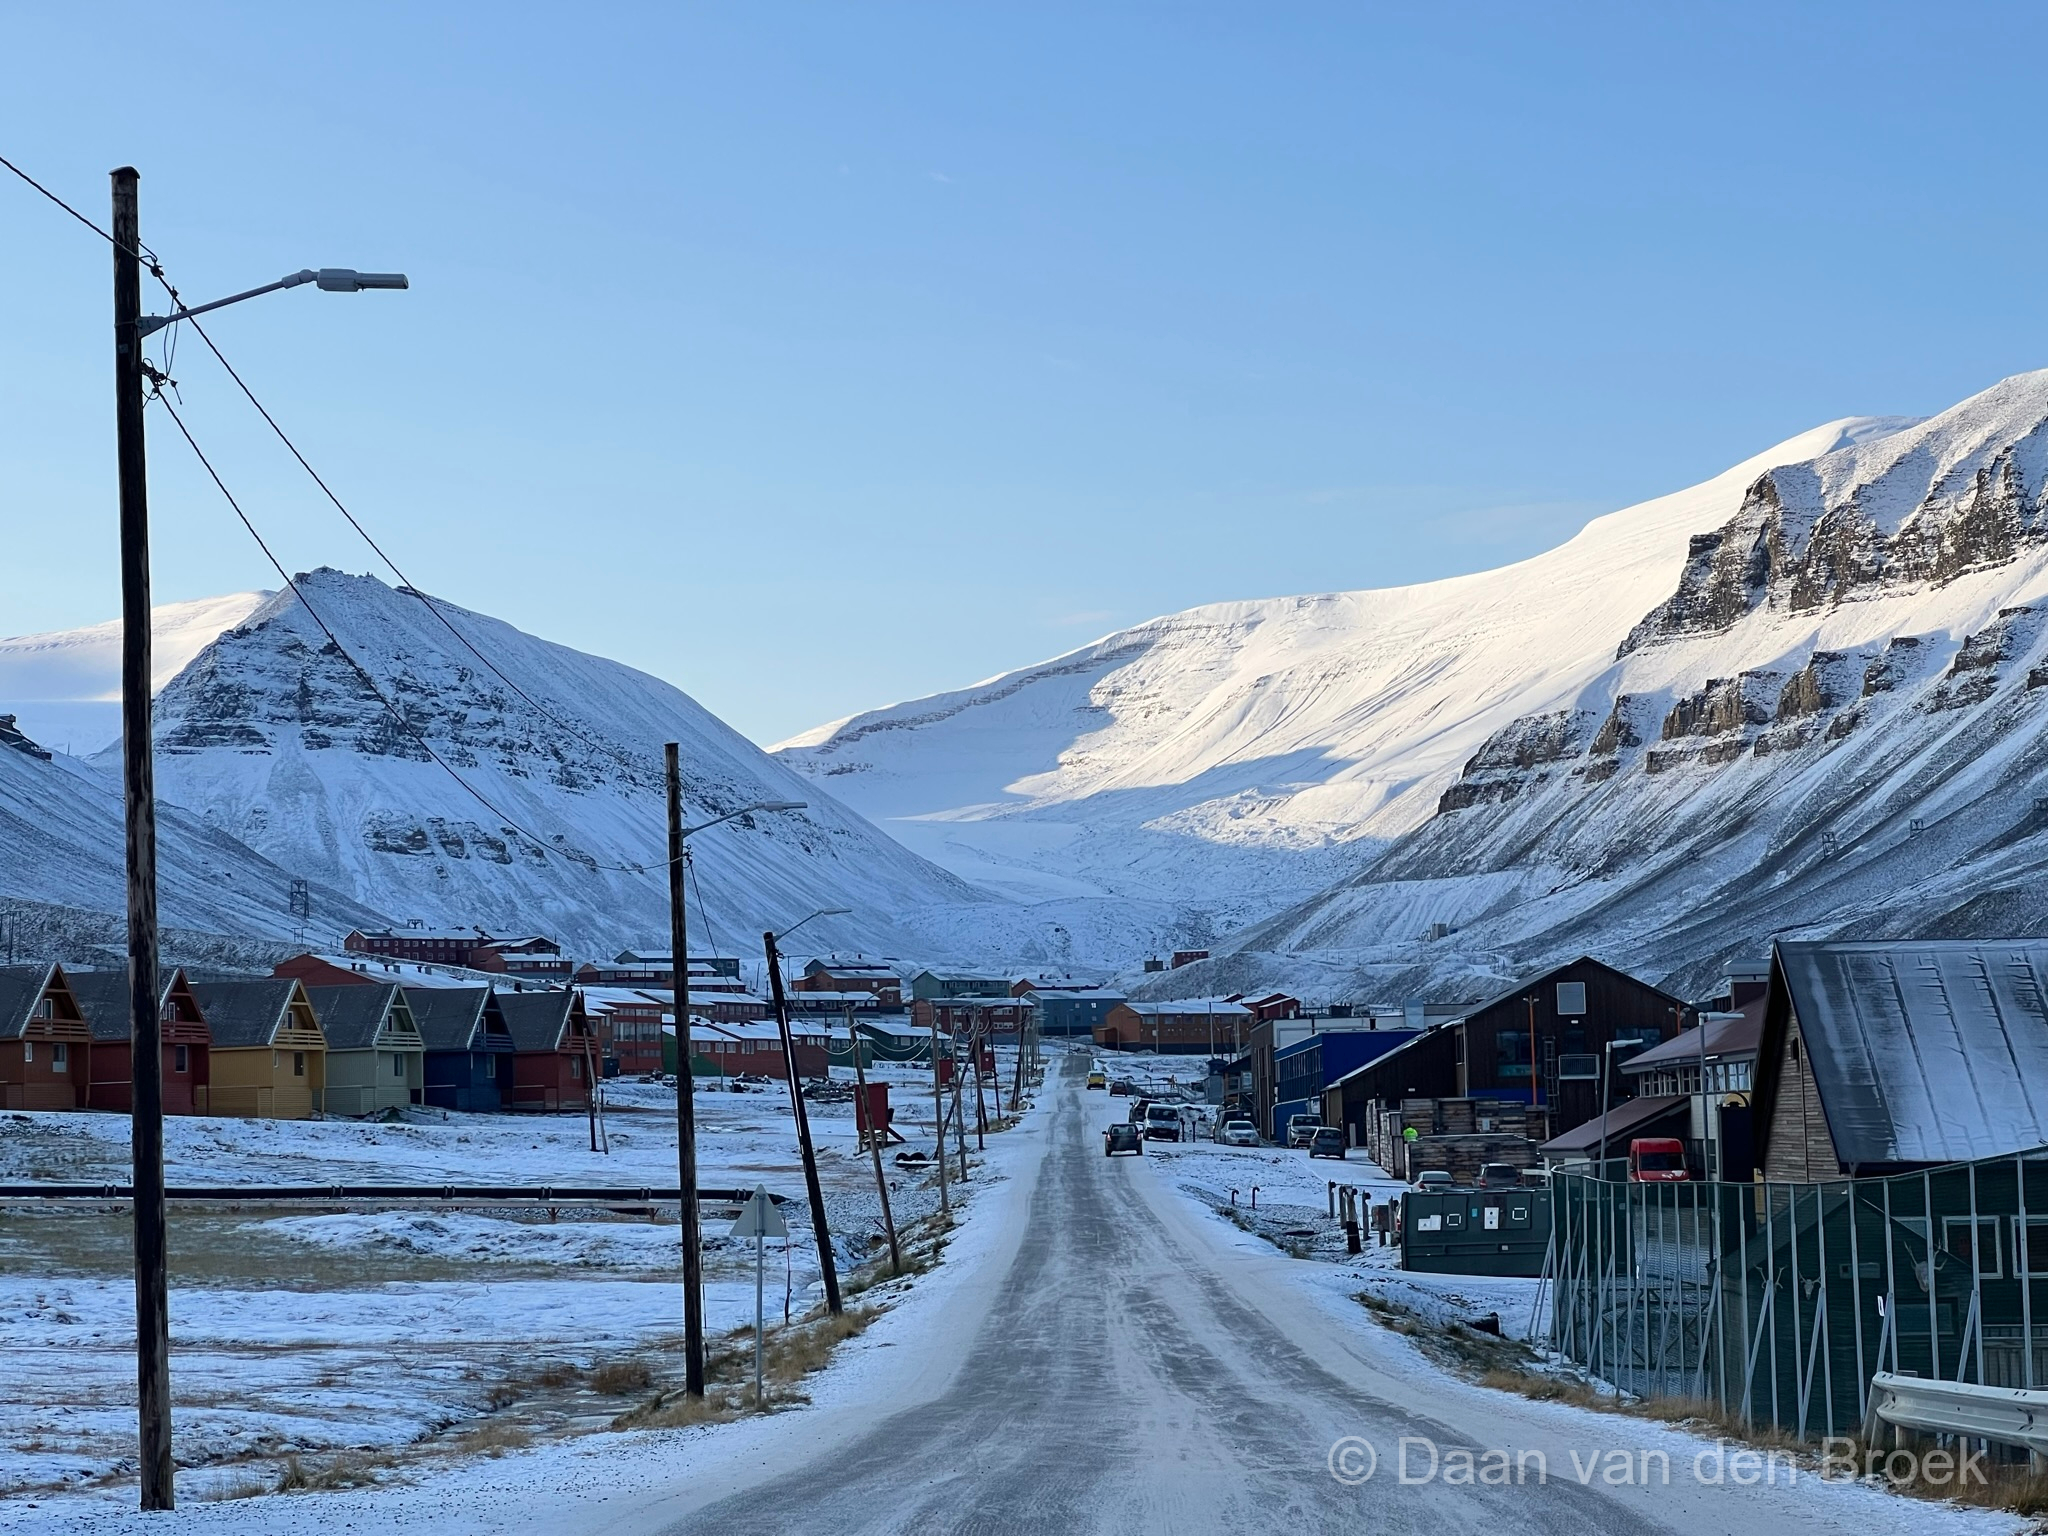 Longyearbyen Climate - Climate of Longyearbyen - Svalbard Climate - Climate of Svalbard - Longyearbyen Climate Guide